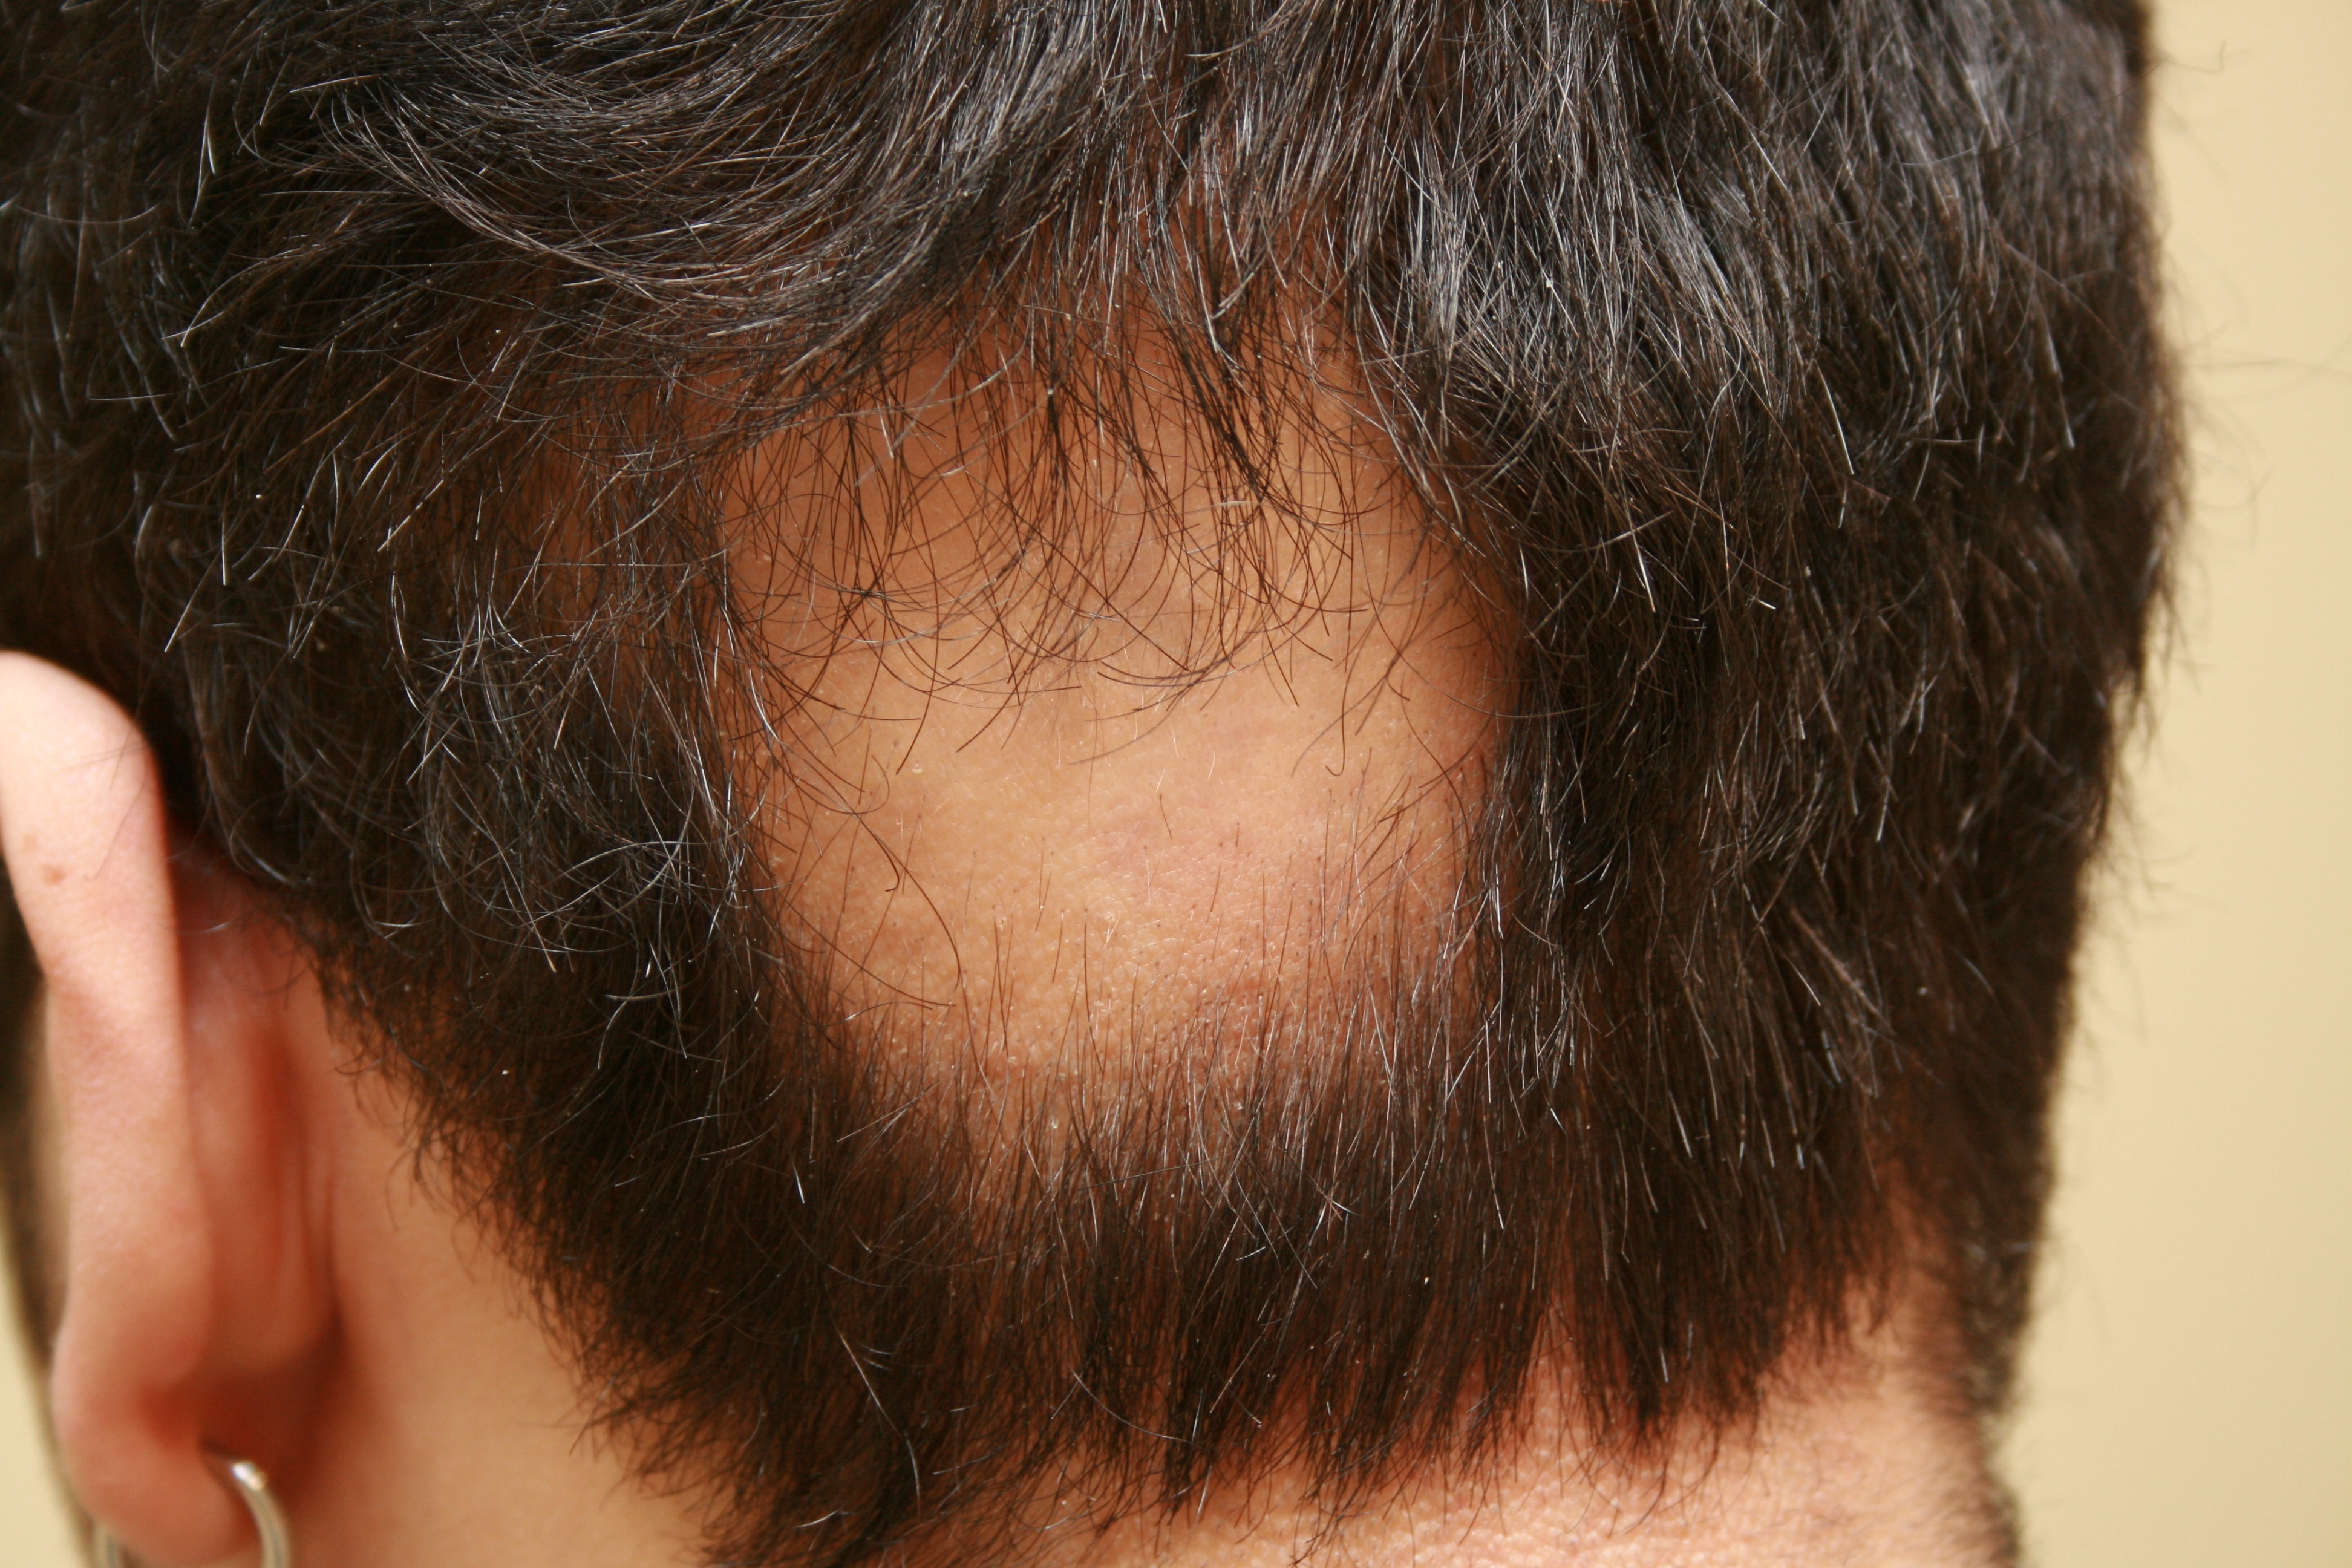 http://drerikson.files.wordpress.com/2011/10/alopecia-areata-before.jpg